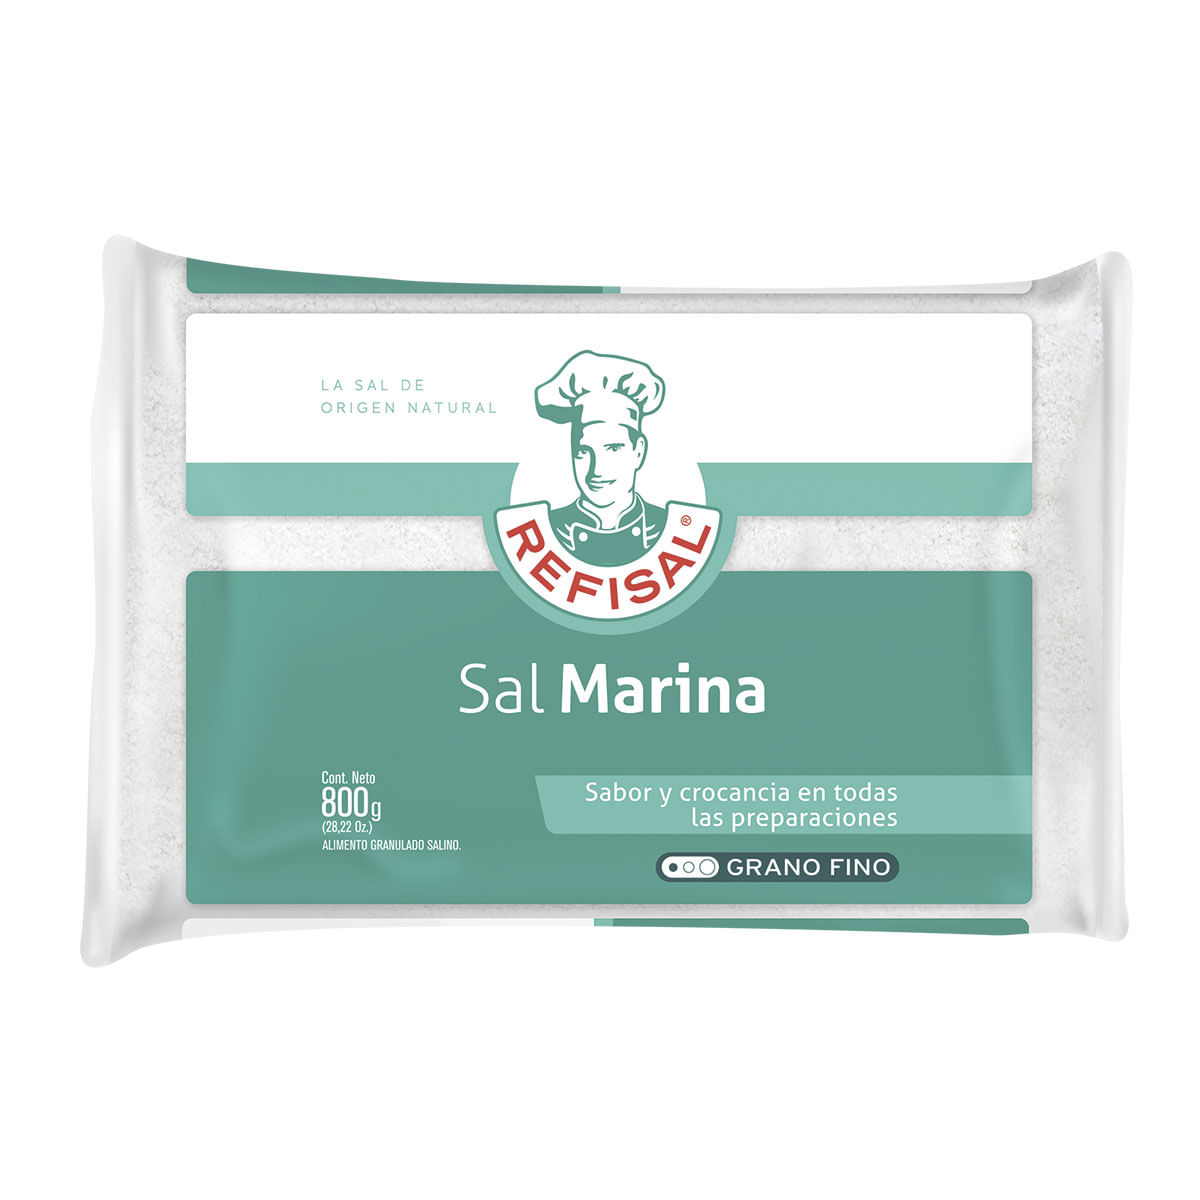 La Vaquita - Salero Refisal 110g Sal Marina